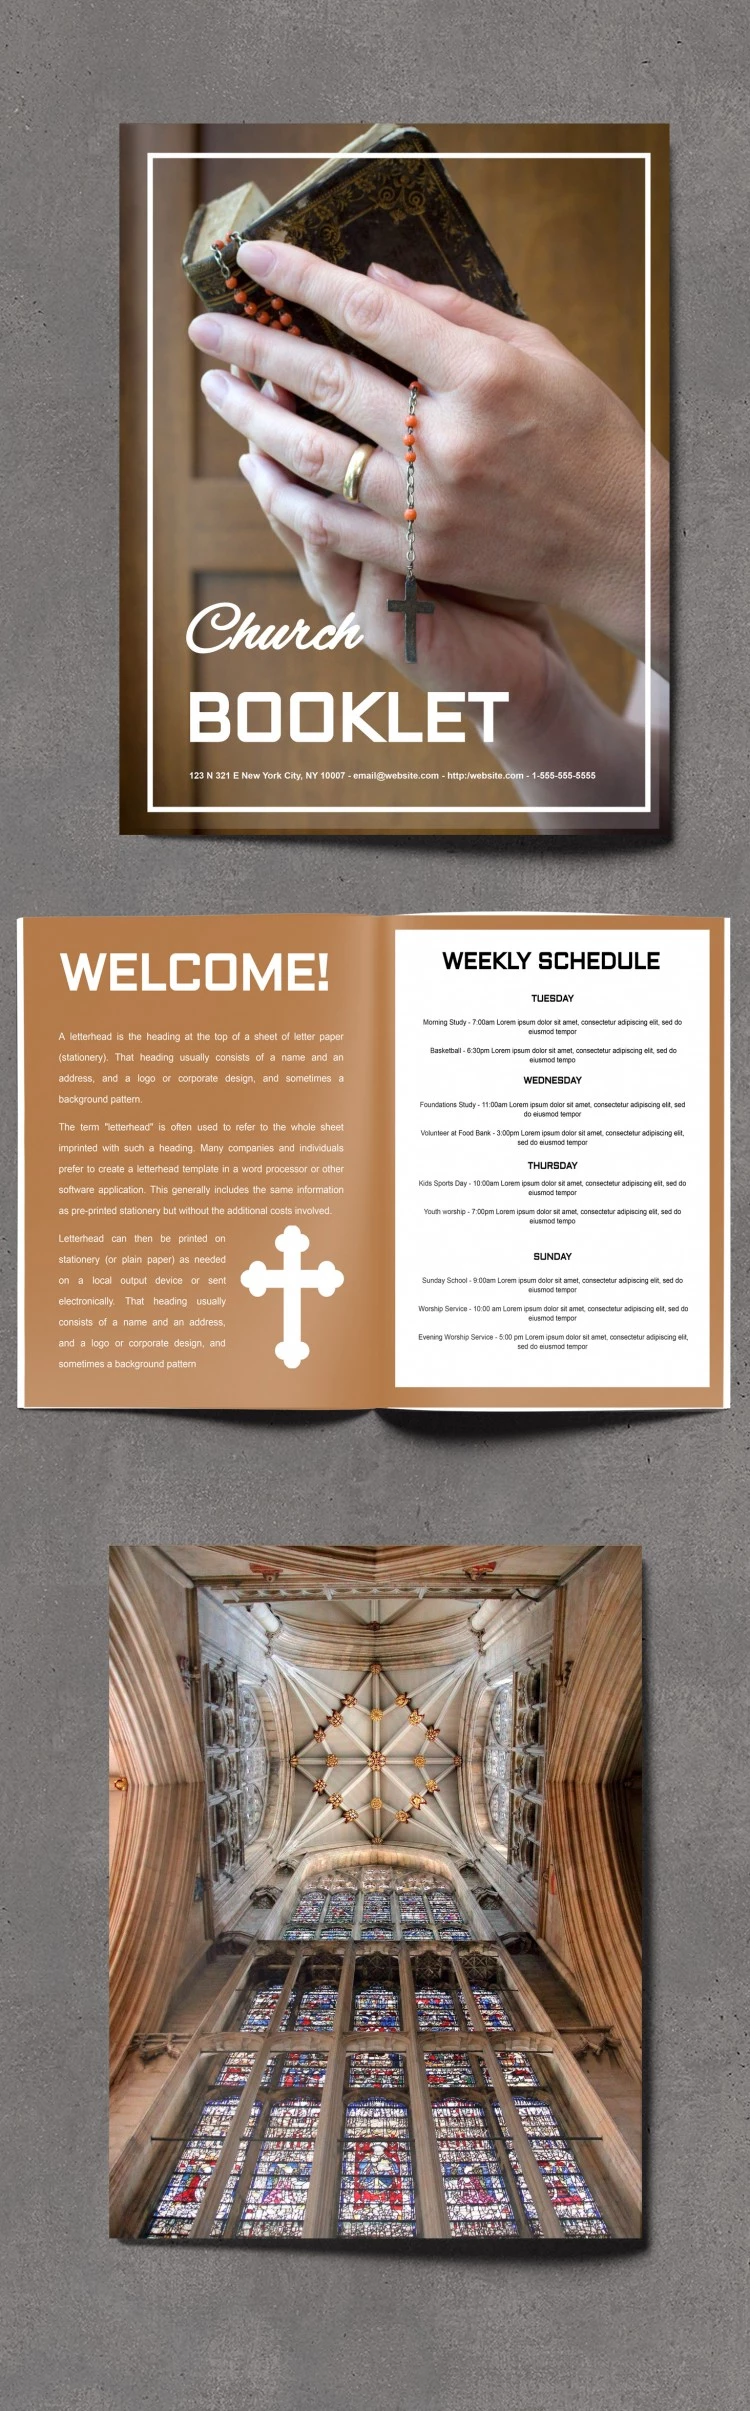 Wonderful Church Booklet - free Google Docs Template - 10061838